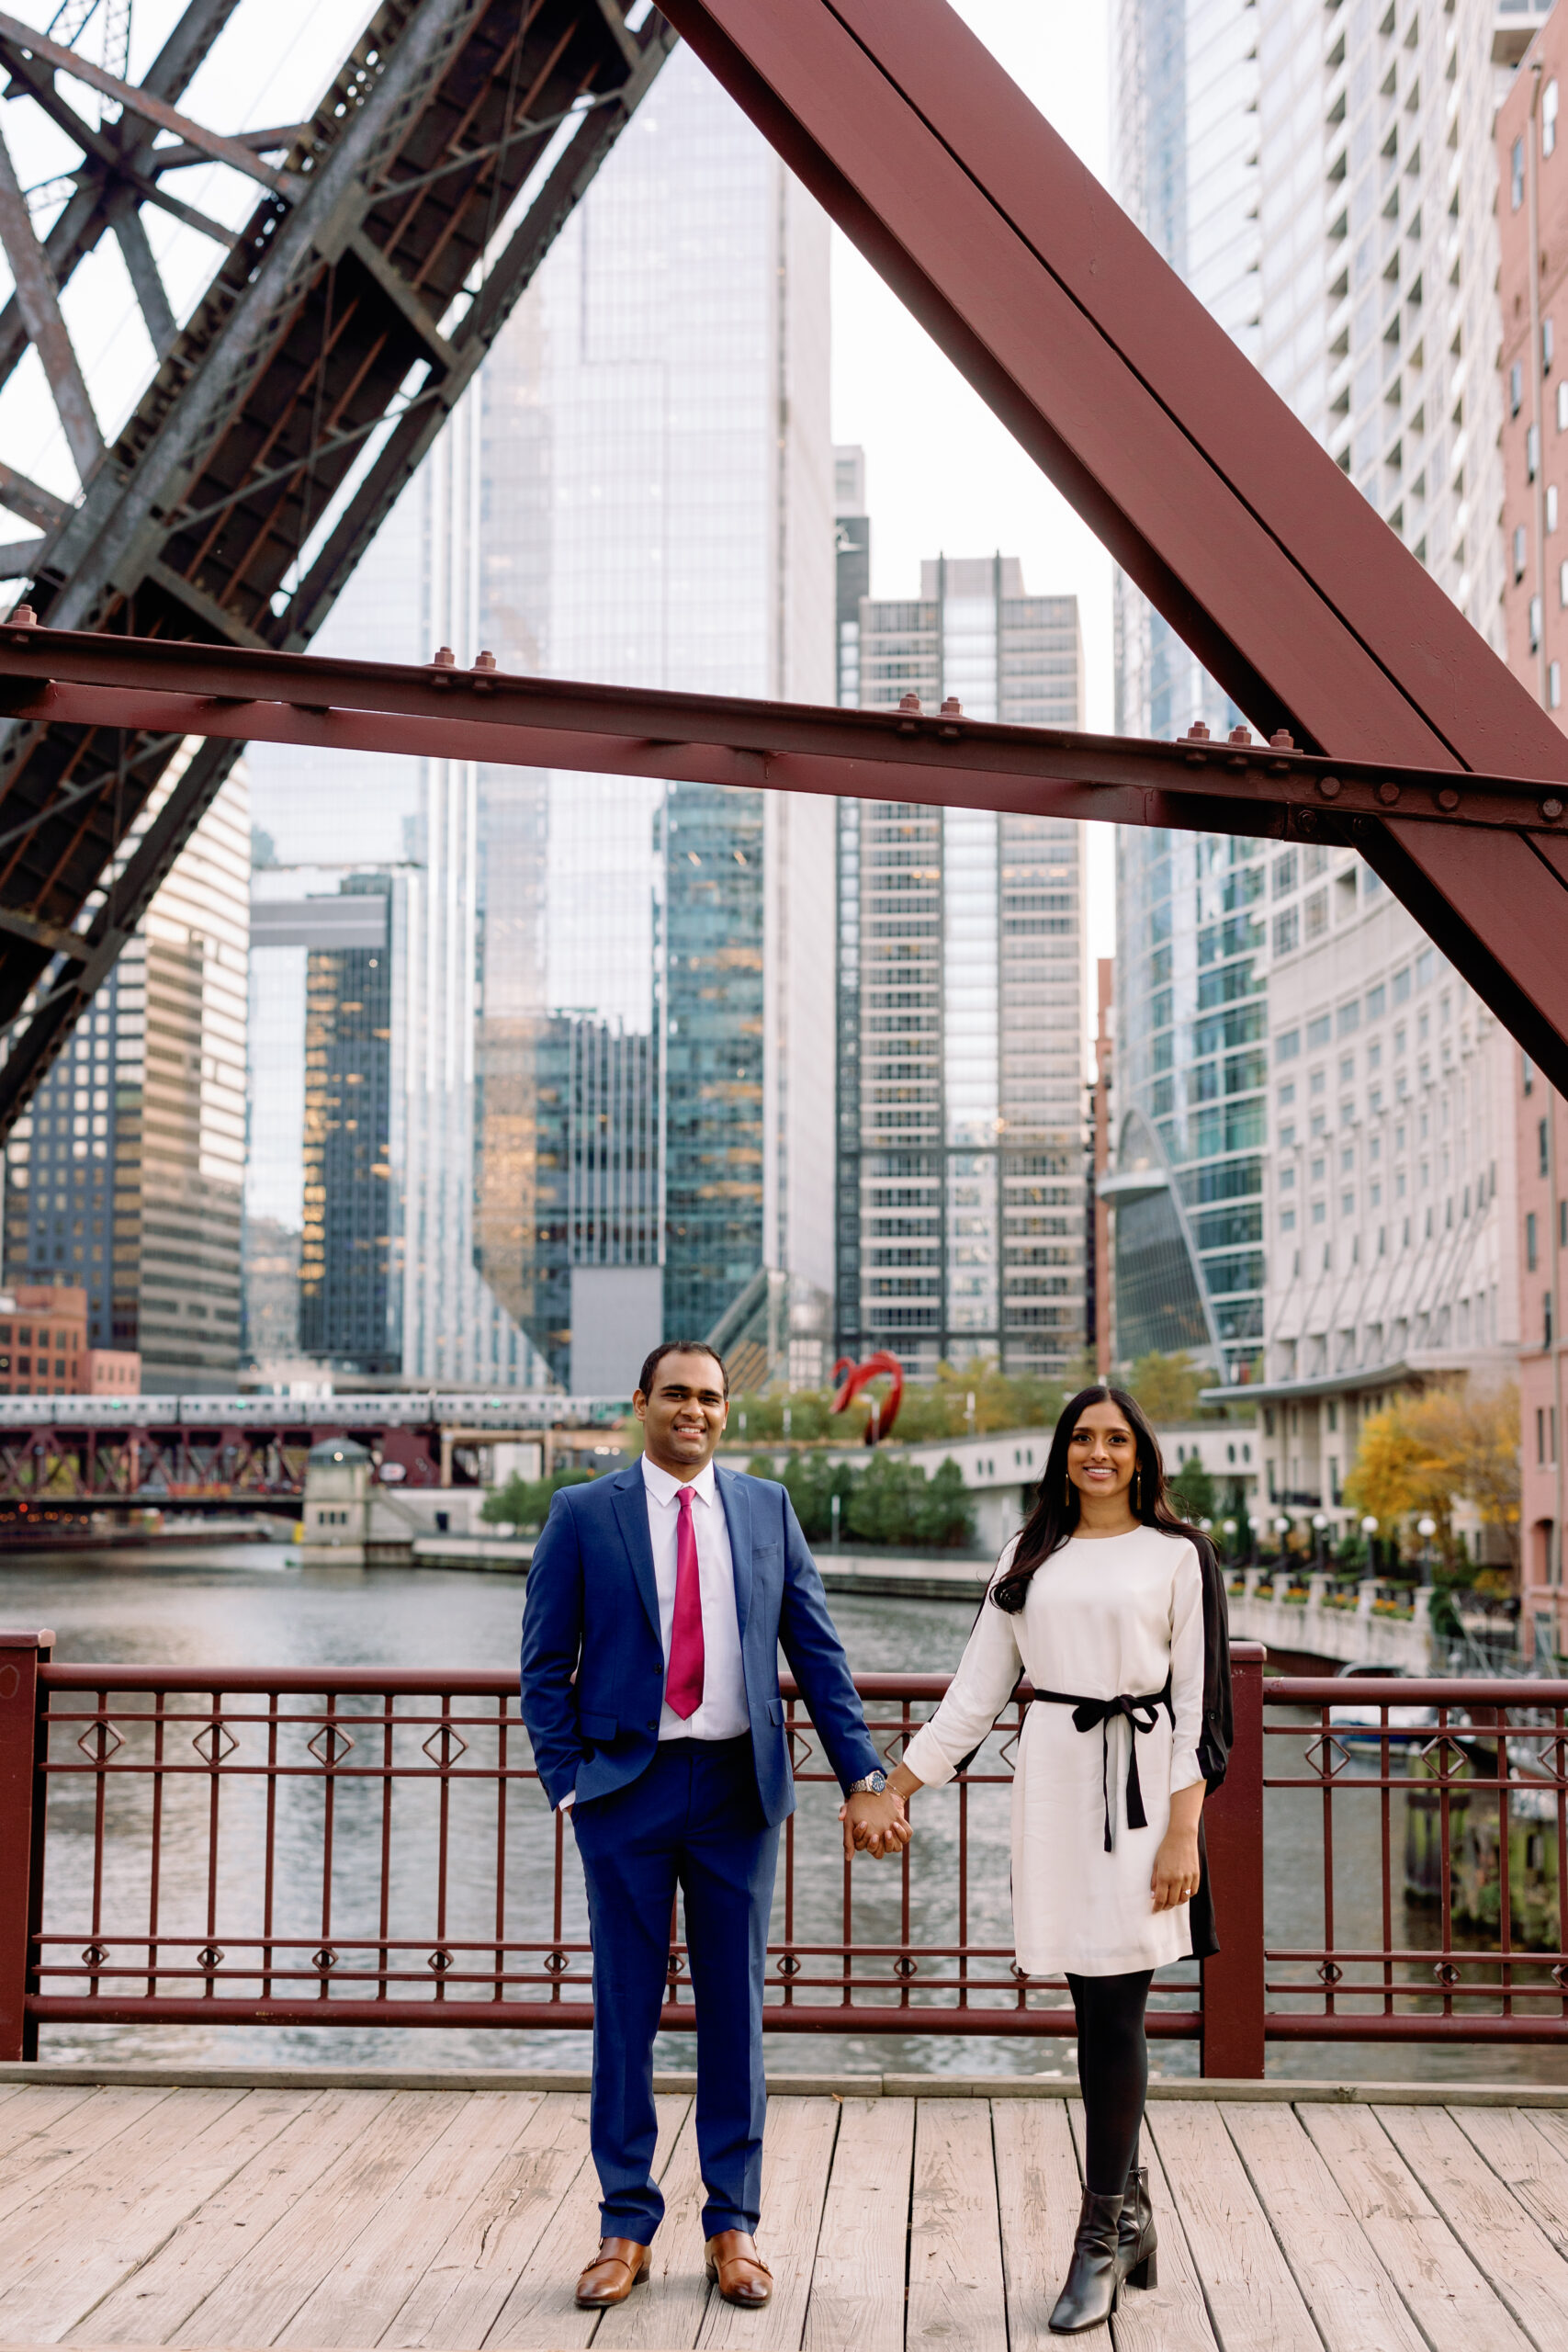 An engagement photo taken on the Kinzie Street Bridge in Chicago.